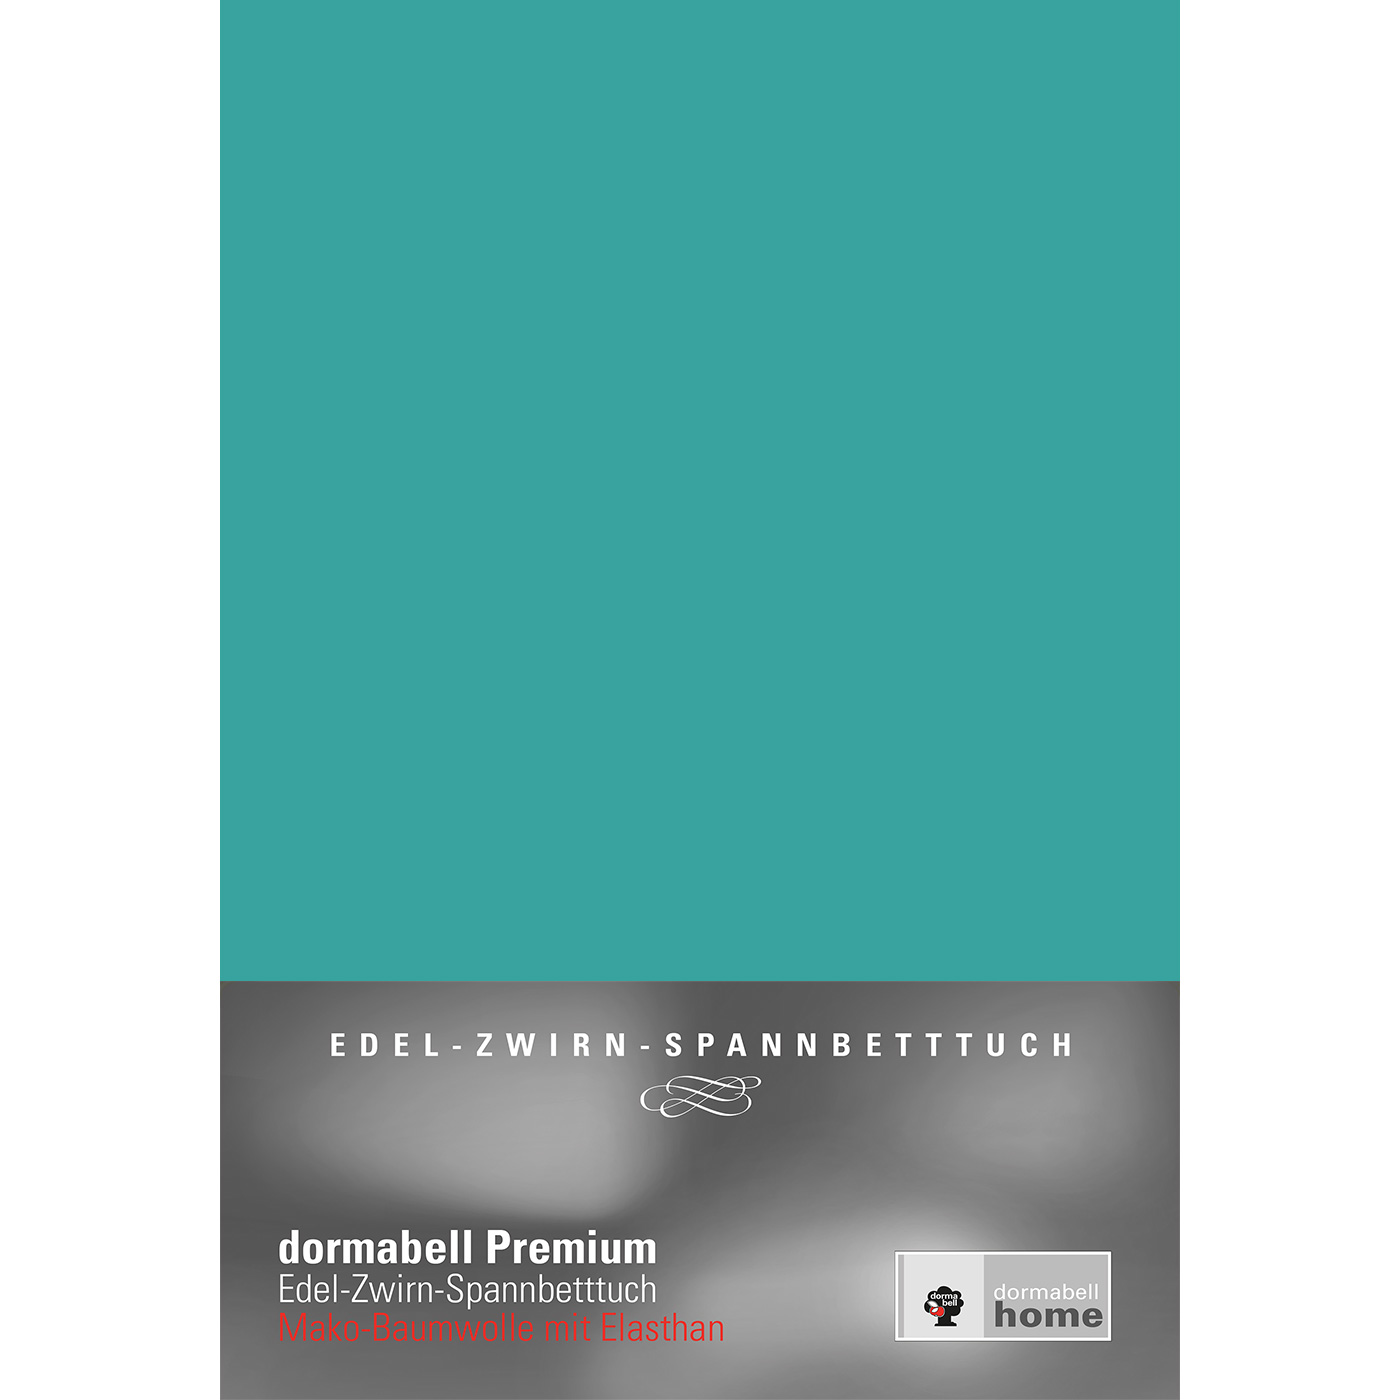 dormabell Premium Jersey-Spannbetttuch petrol